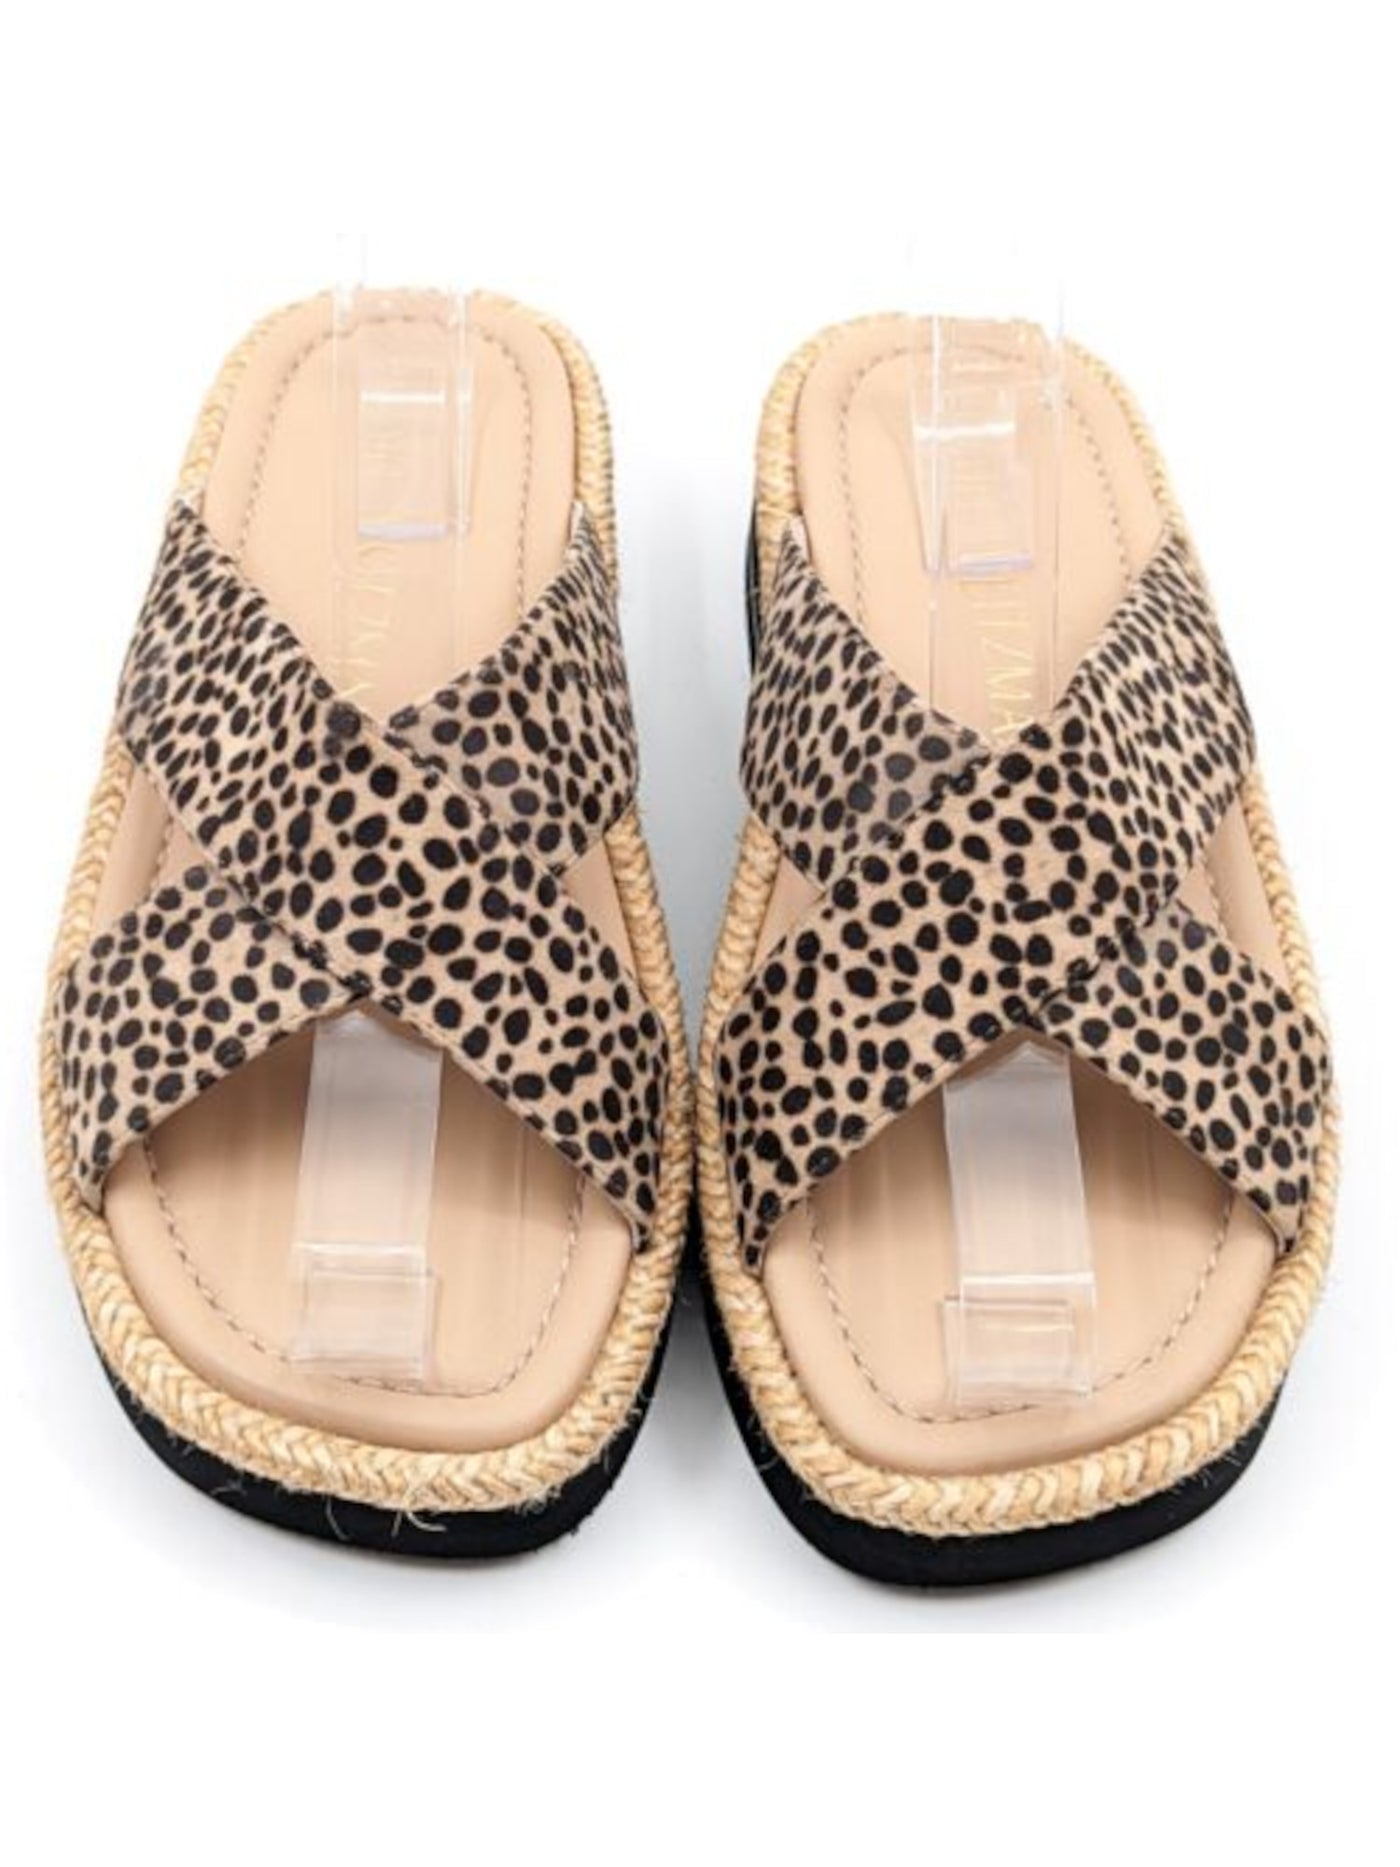 STUART WEITZMAN Womens Beige Animal Print Cushioned Braided Roza Square Toe Slip On Leather Slide Sandals Shoes 7.5 B